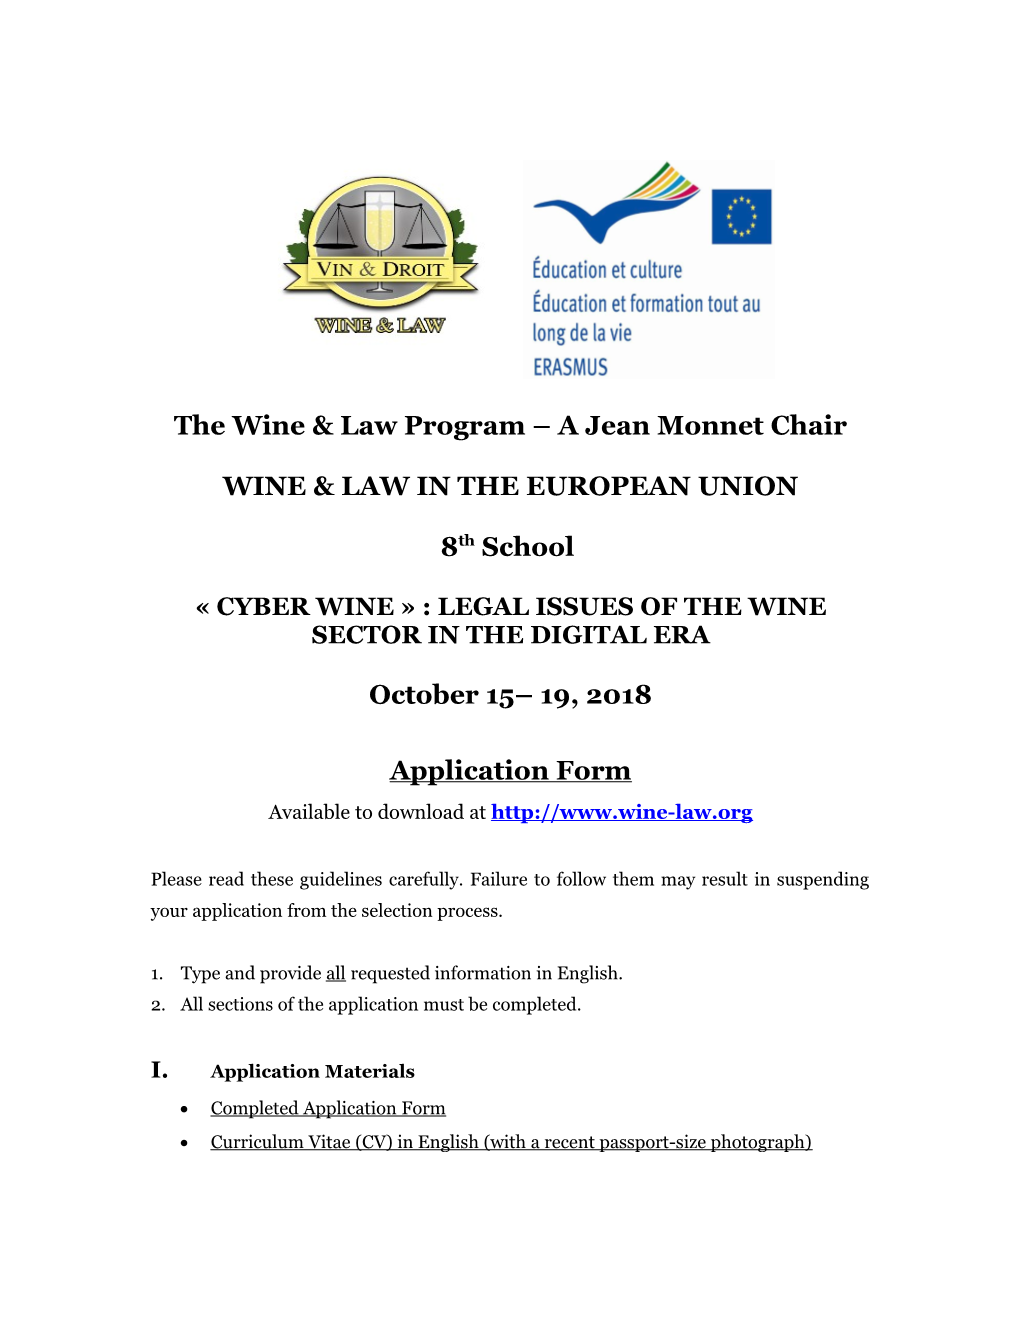 The Wine & Law Program a Jean Monnet Chair